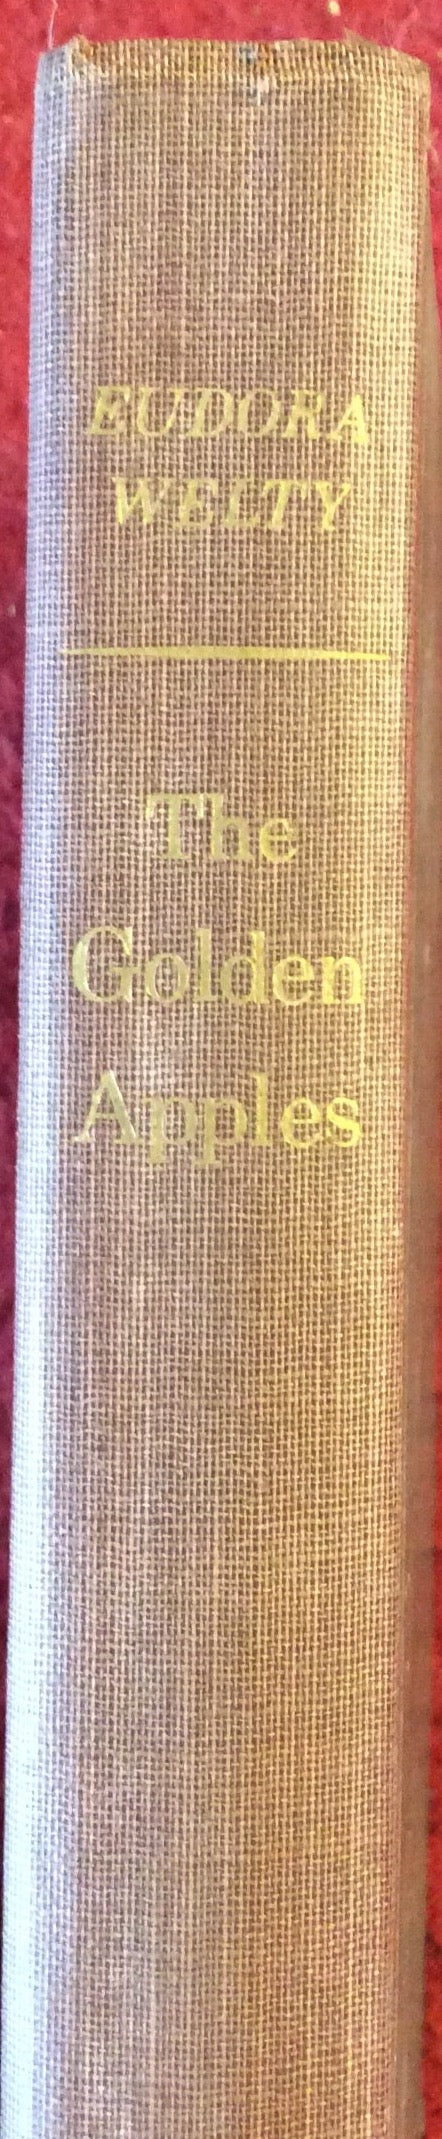 The Golden Apples, Eudora Welty, Harcourt, Brace & Co., 1949 *